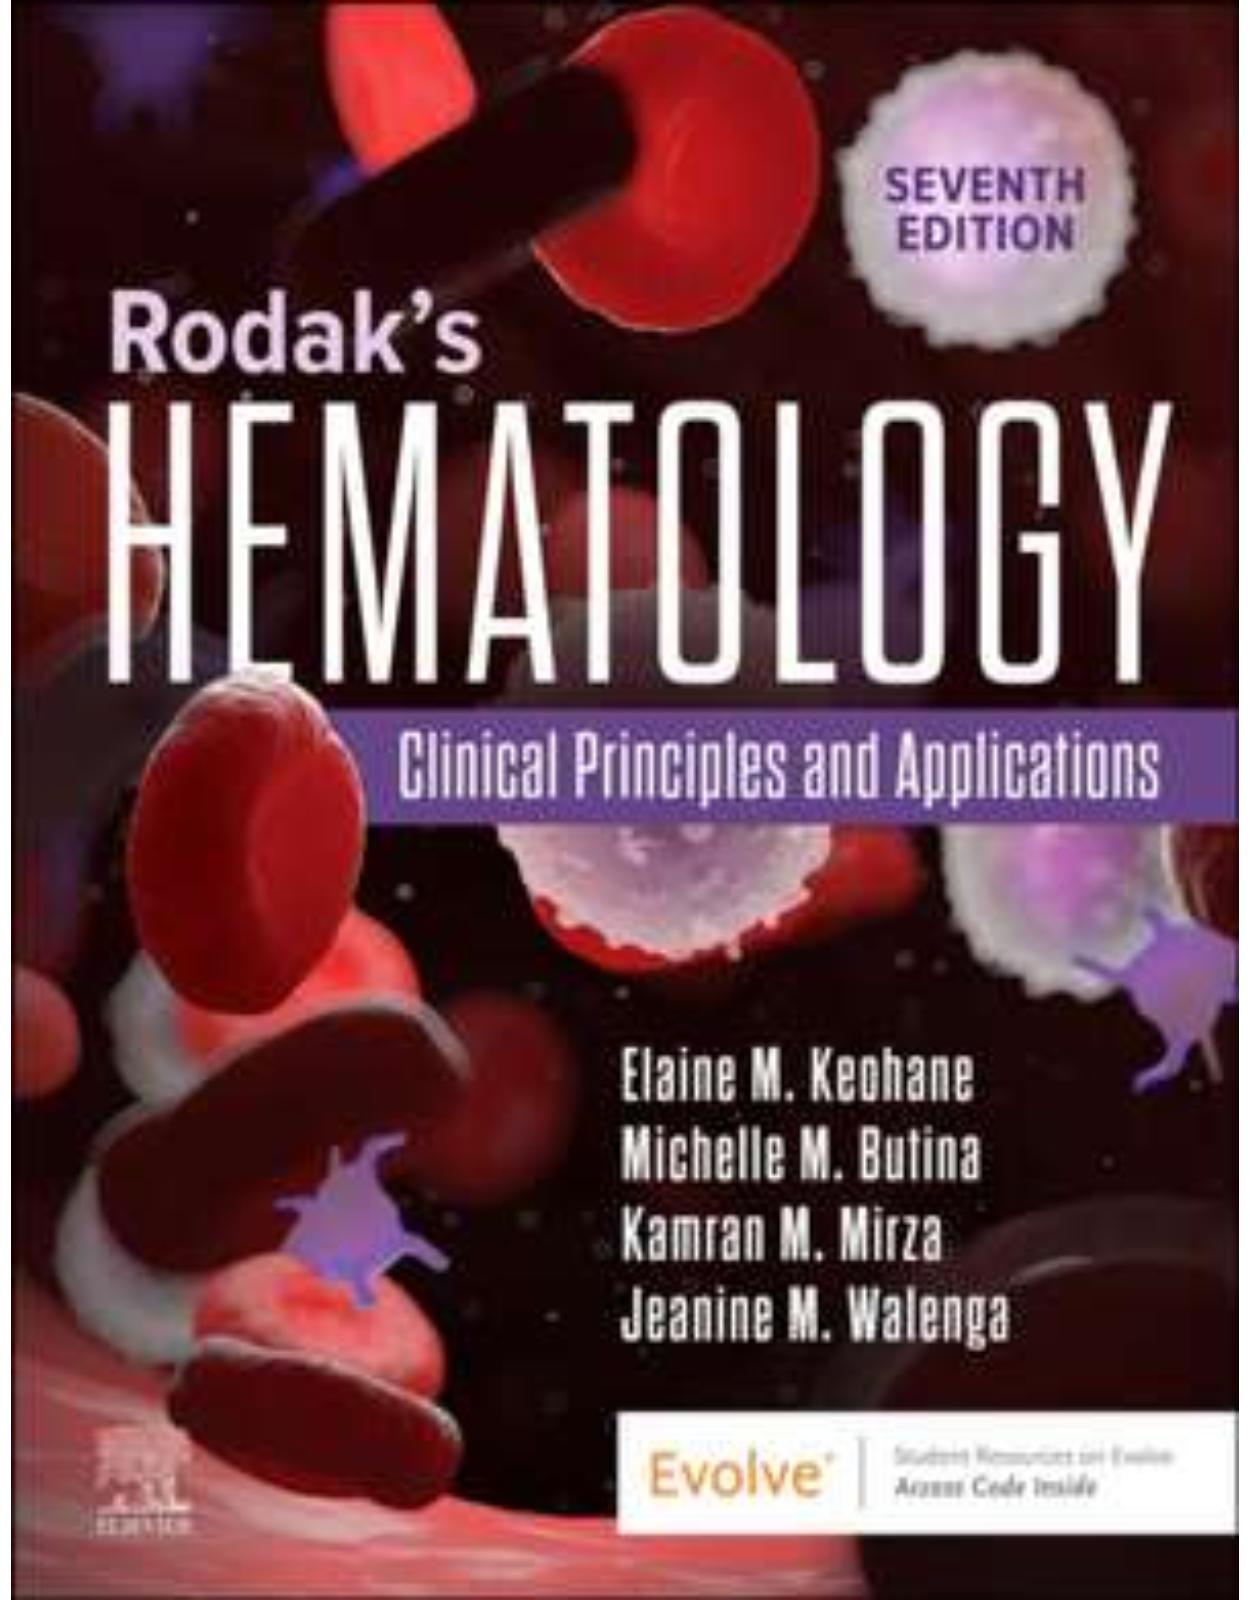 Rodak’s Hematology, 7th Edition